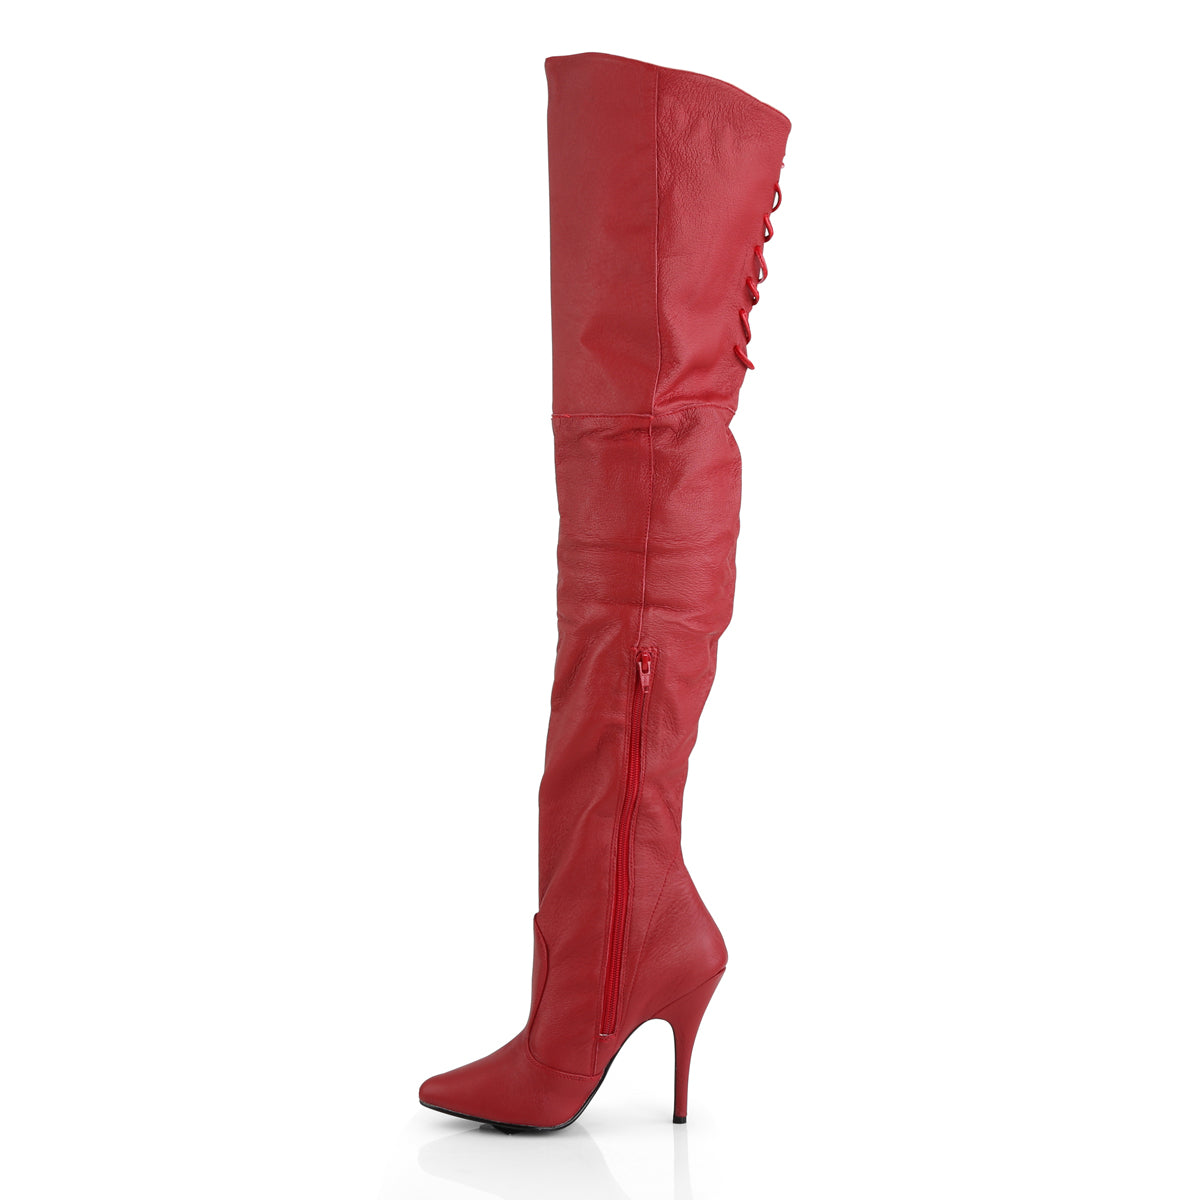 LEGEND-8899 Pleaser 5 Inch Heel Red Leather Fetish Footwear-Pleaser- Sexy Shoes Pole Dance Heels